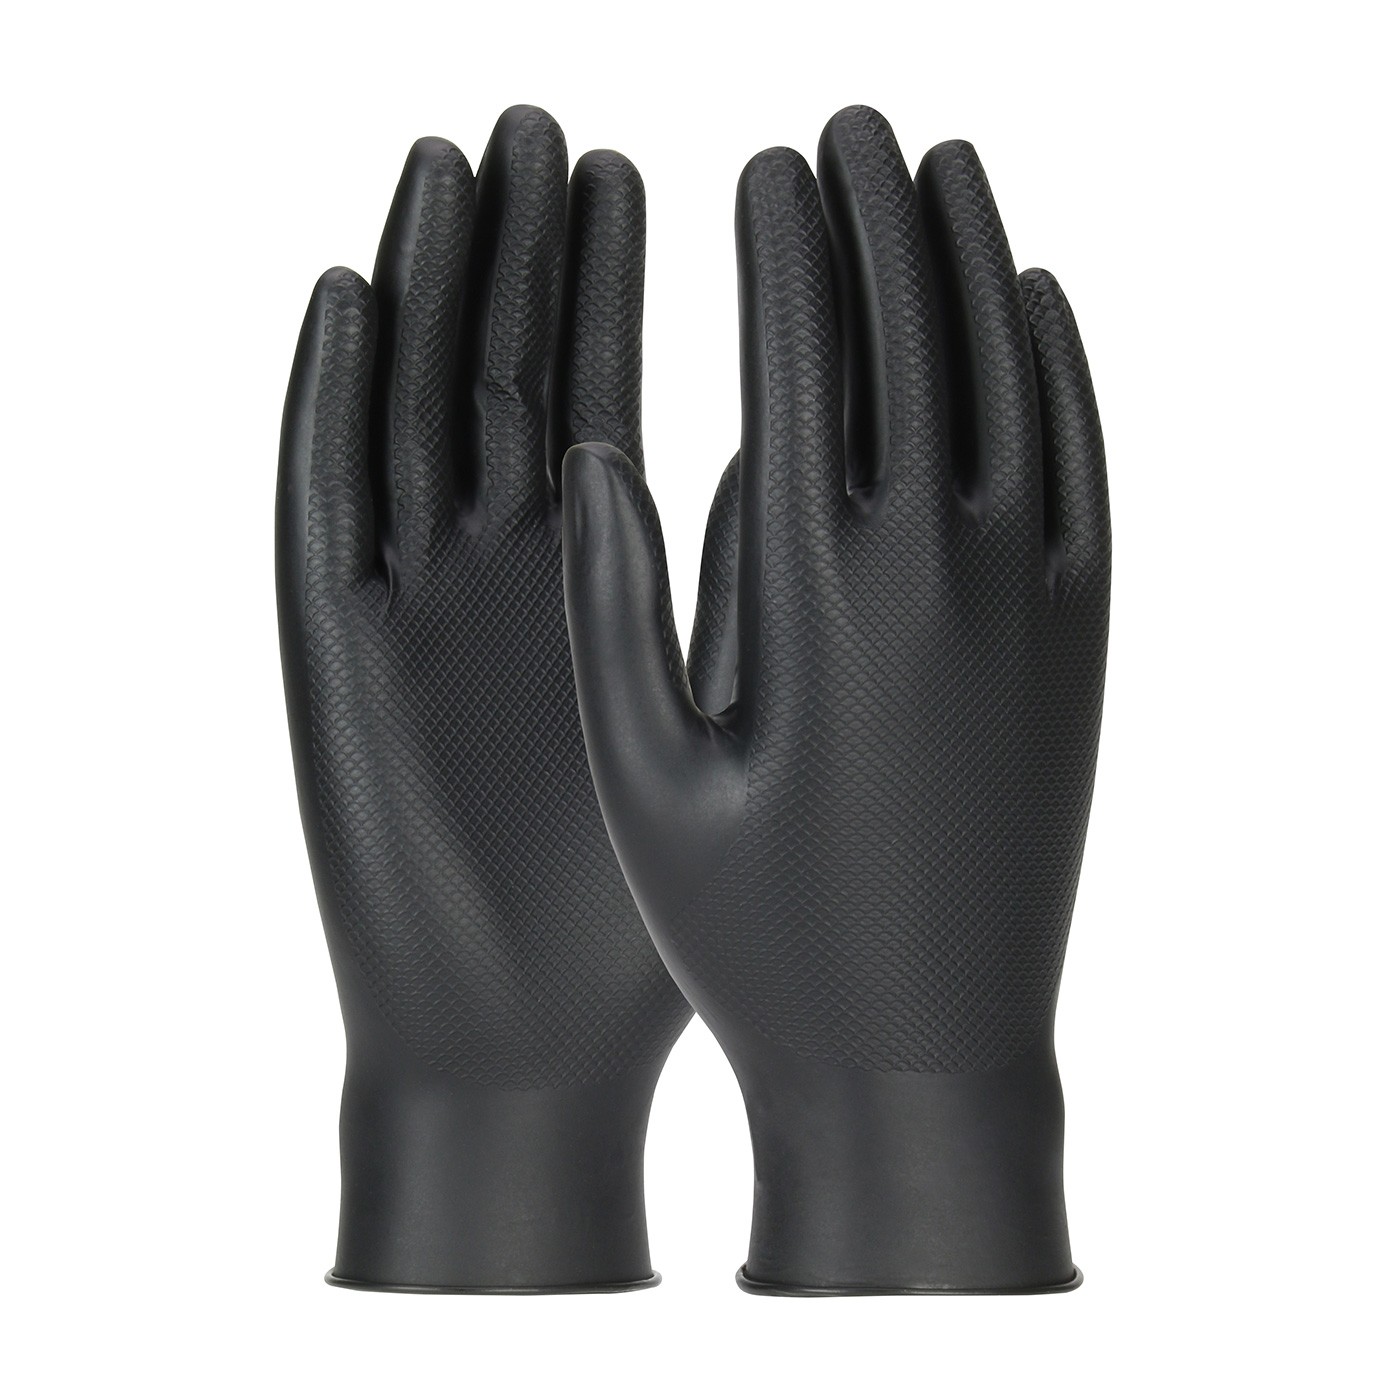 Grippaz™ Skins Superior Ambidextrous Nitrile Glove with Textured Fish Scale Grip - 6 Mil  (#67-246)